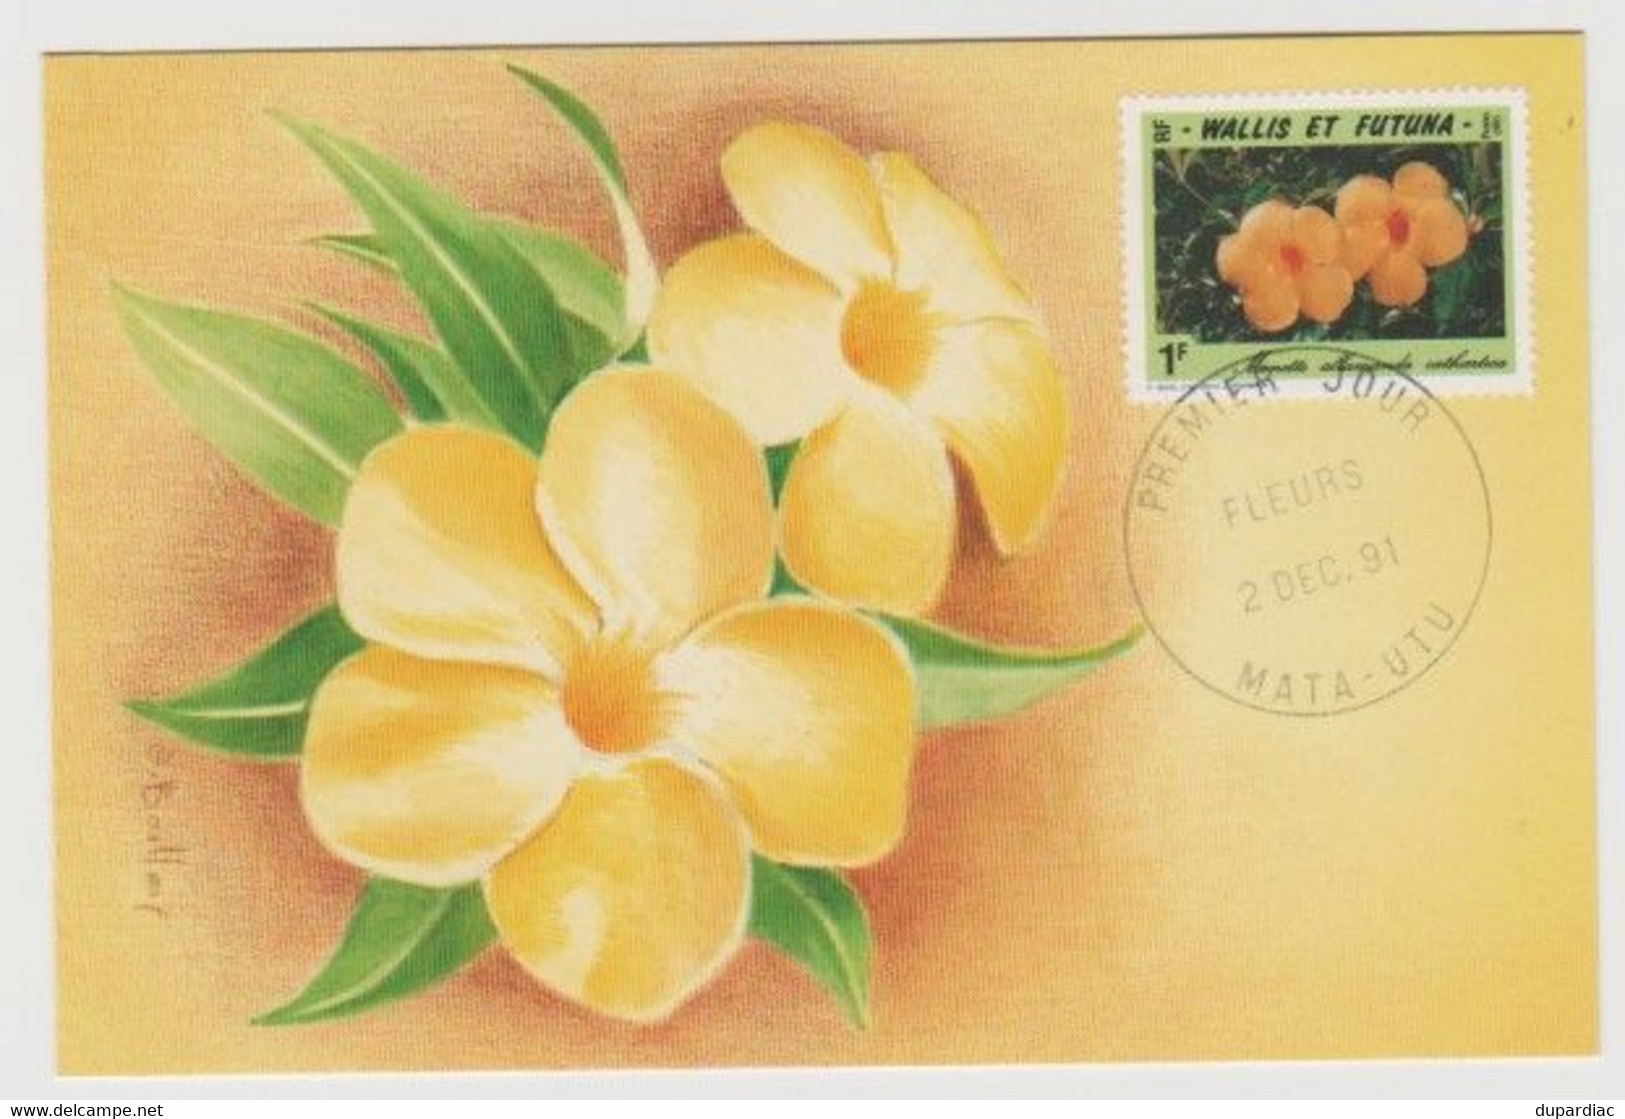 986 - Wallis Et Futuna /  Premier Jour MATA-UTU : Fleurs, Monette, 2 Déc. 91 (Illustration O. Baillais). - Wallis Et Futuna